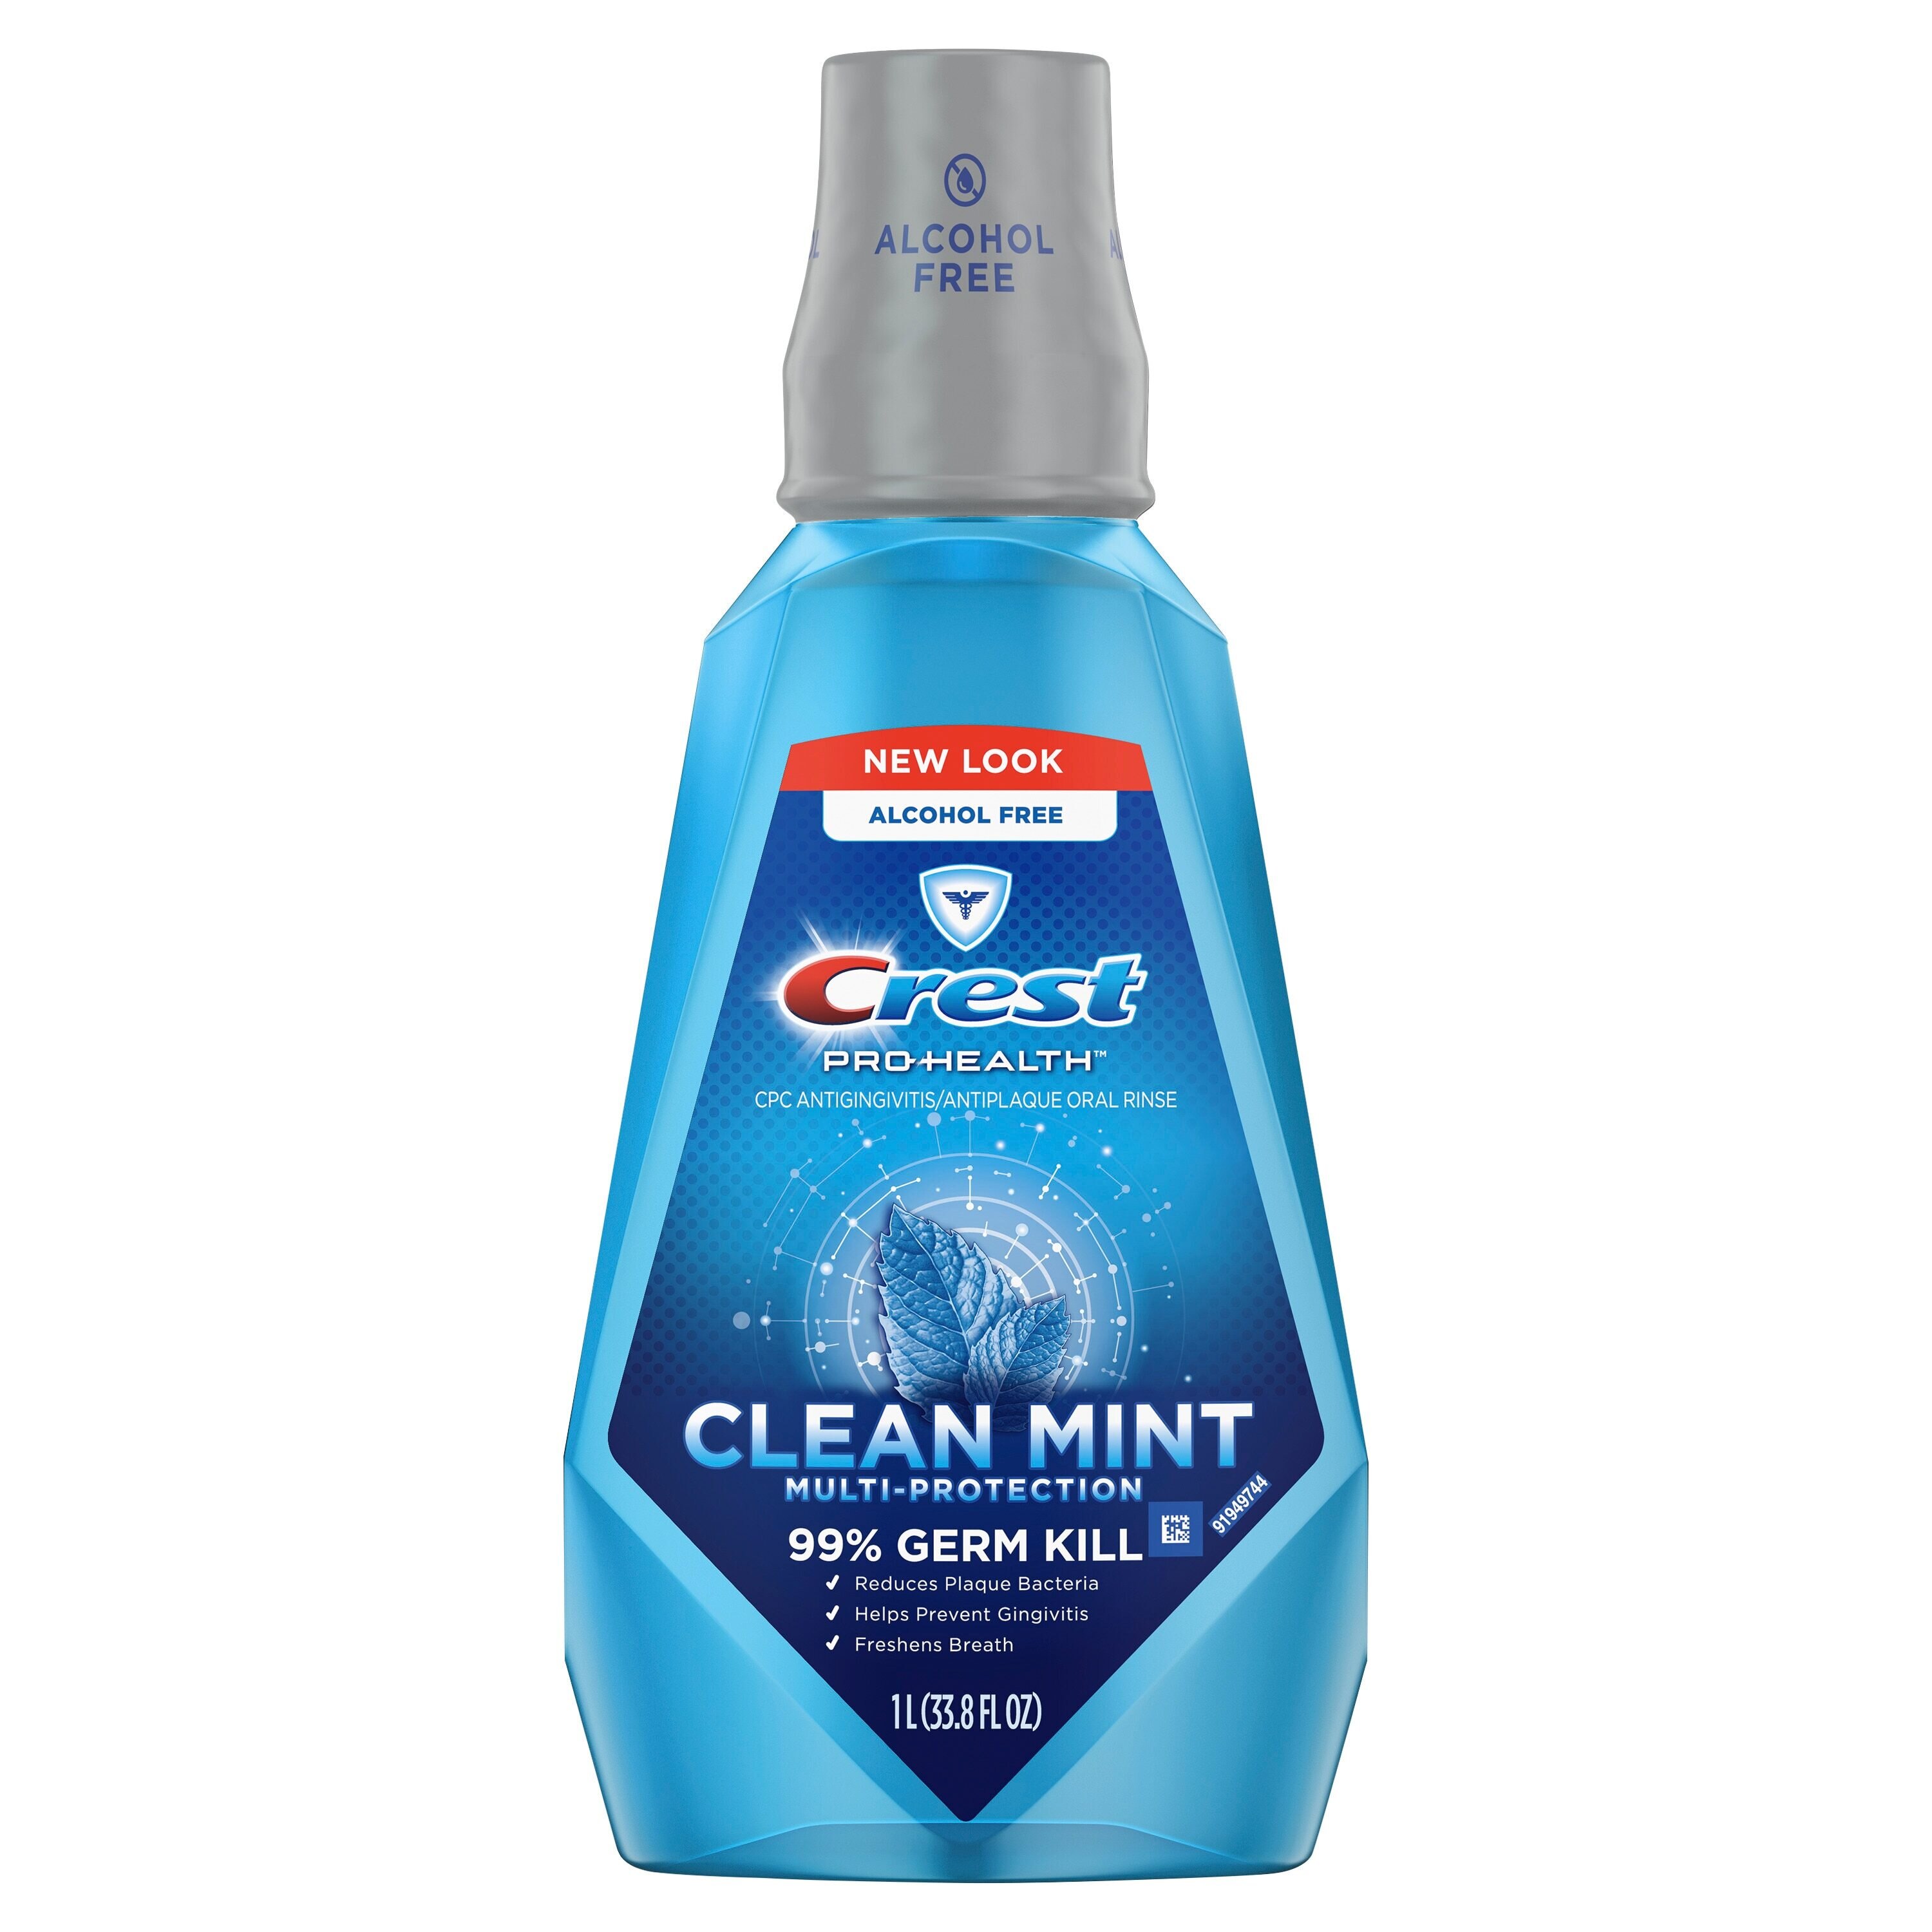 Crest Pro-Health Mouthwash, Alcohol Free, Clean Mint Multi-Protection